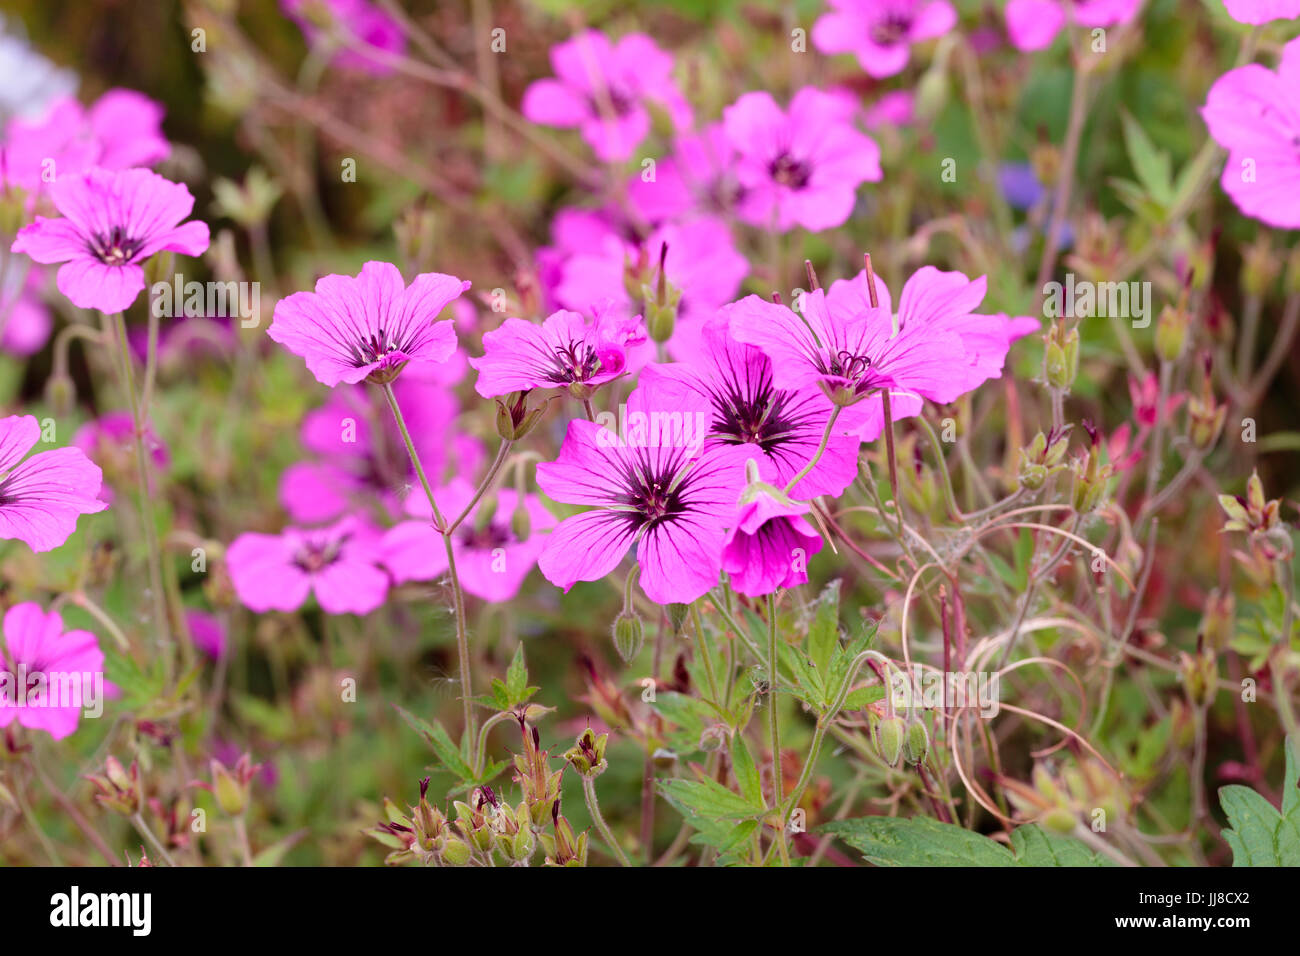 Bright pink flowers of the long flowering sterile Geranium psilostemon hybrid, Geranium 'Patricia' Stock Photo